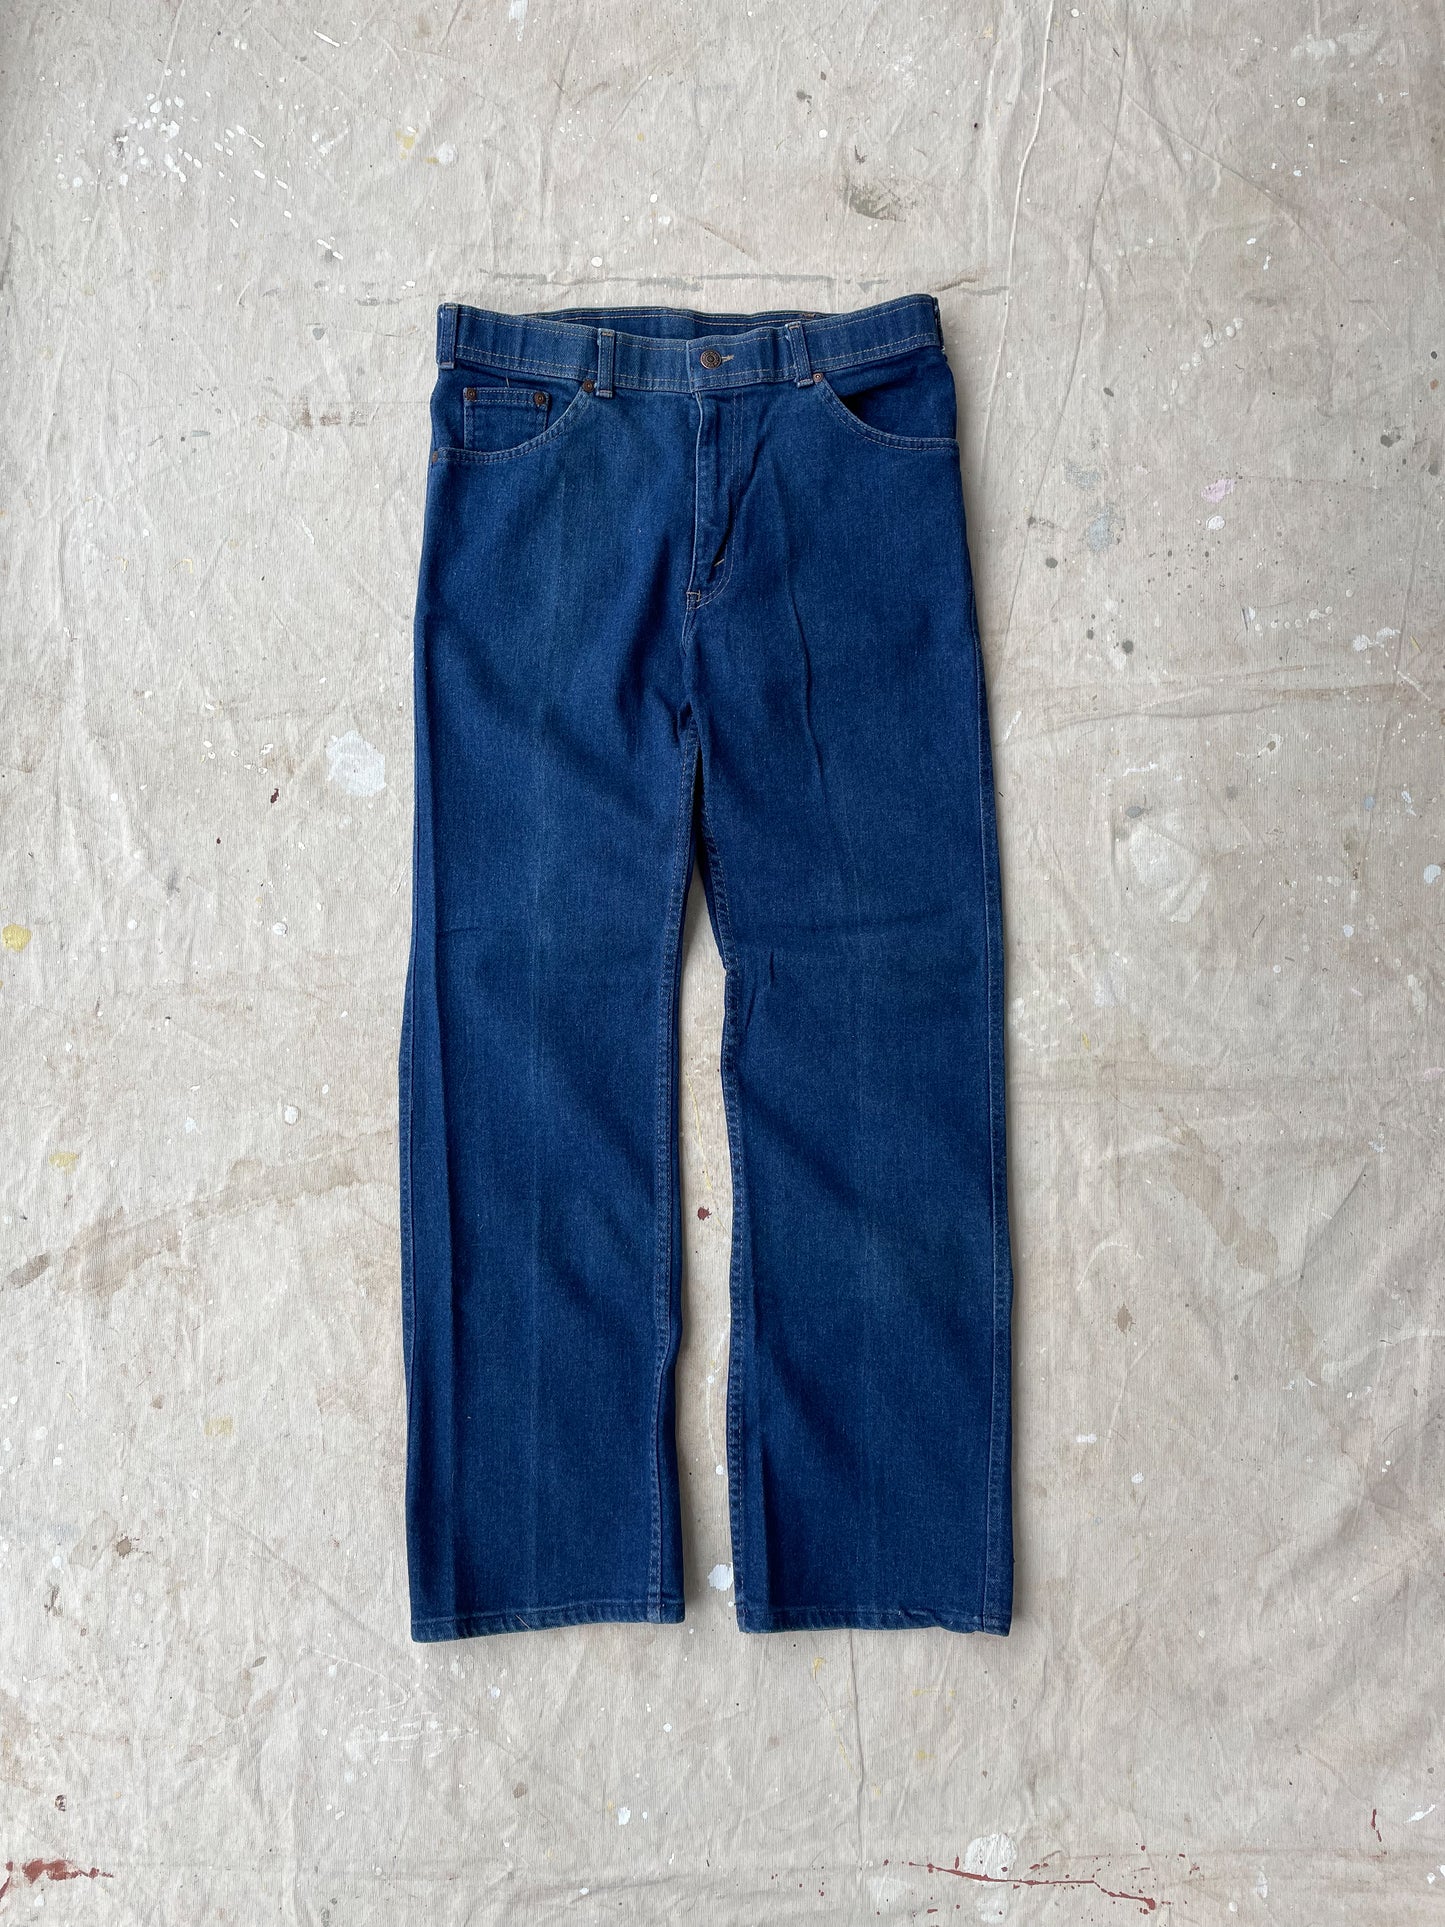 70's Levi's Orange Tab Jeans—[32x32]